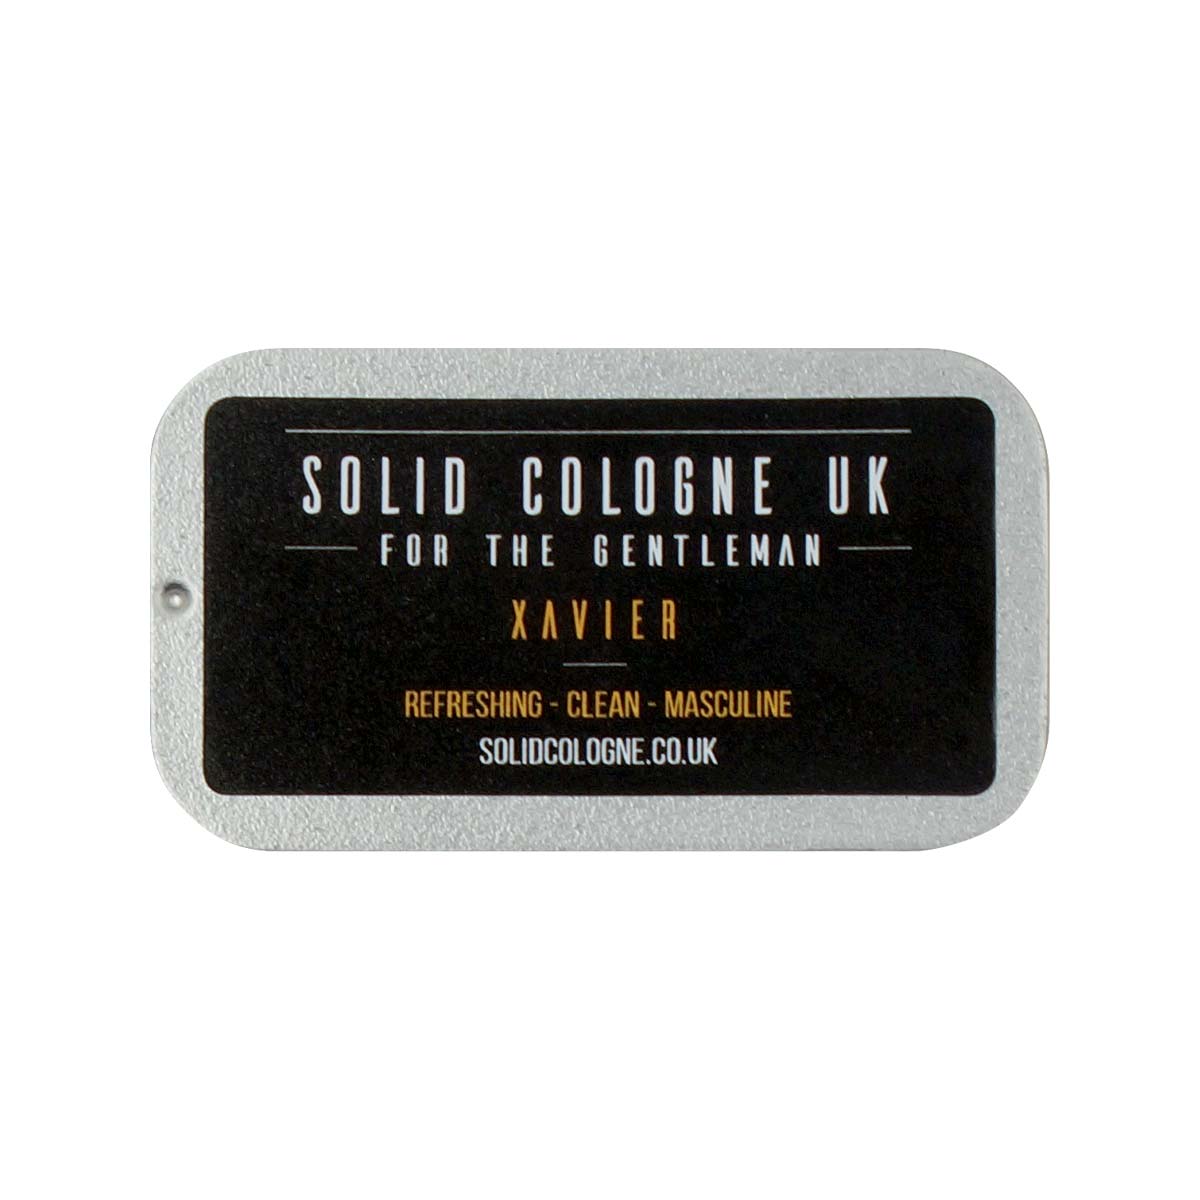 Solid Cologne UK シャビエル (練り香水 メンズ) 18ml-p_2